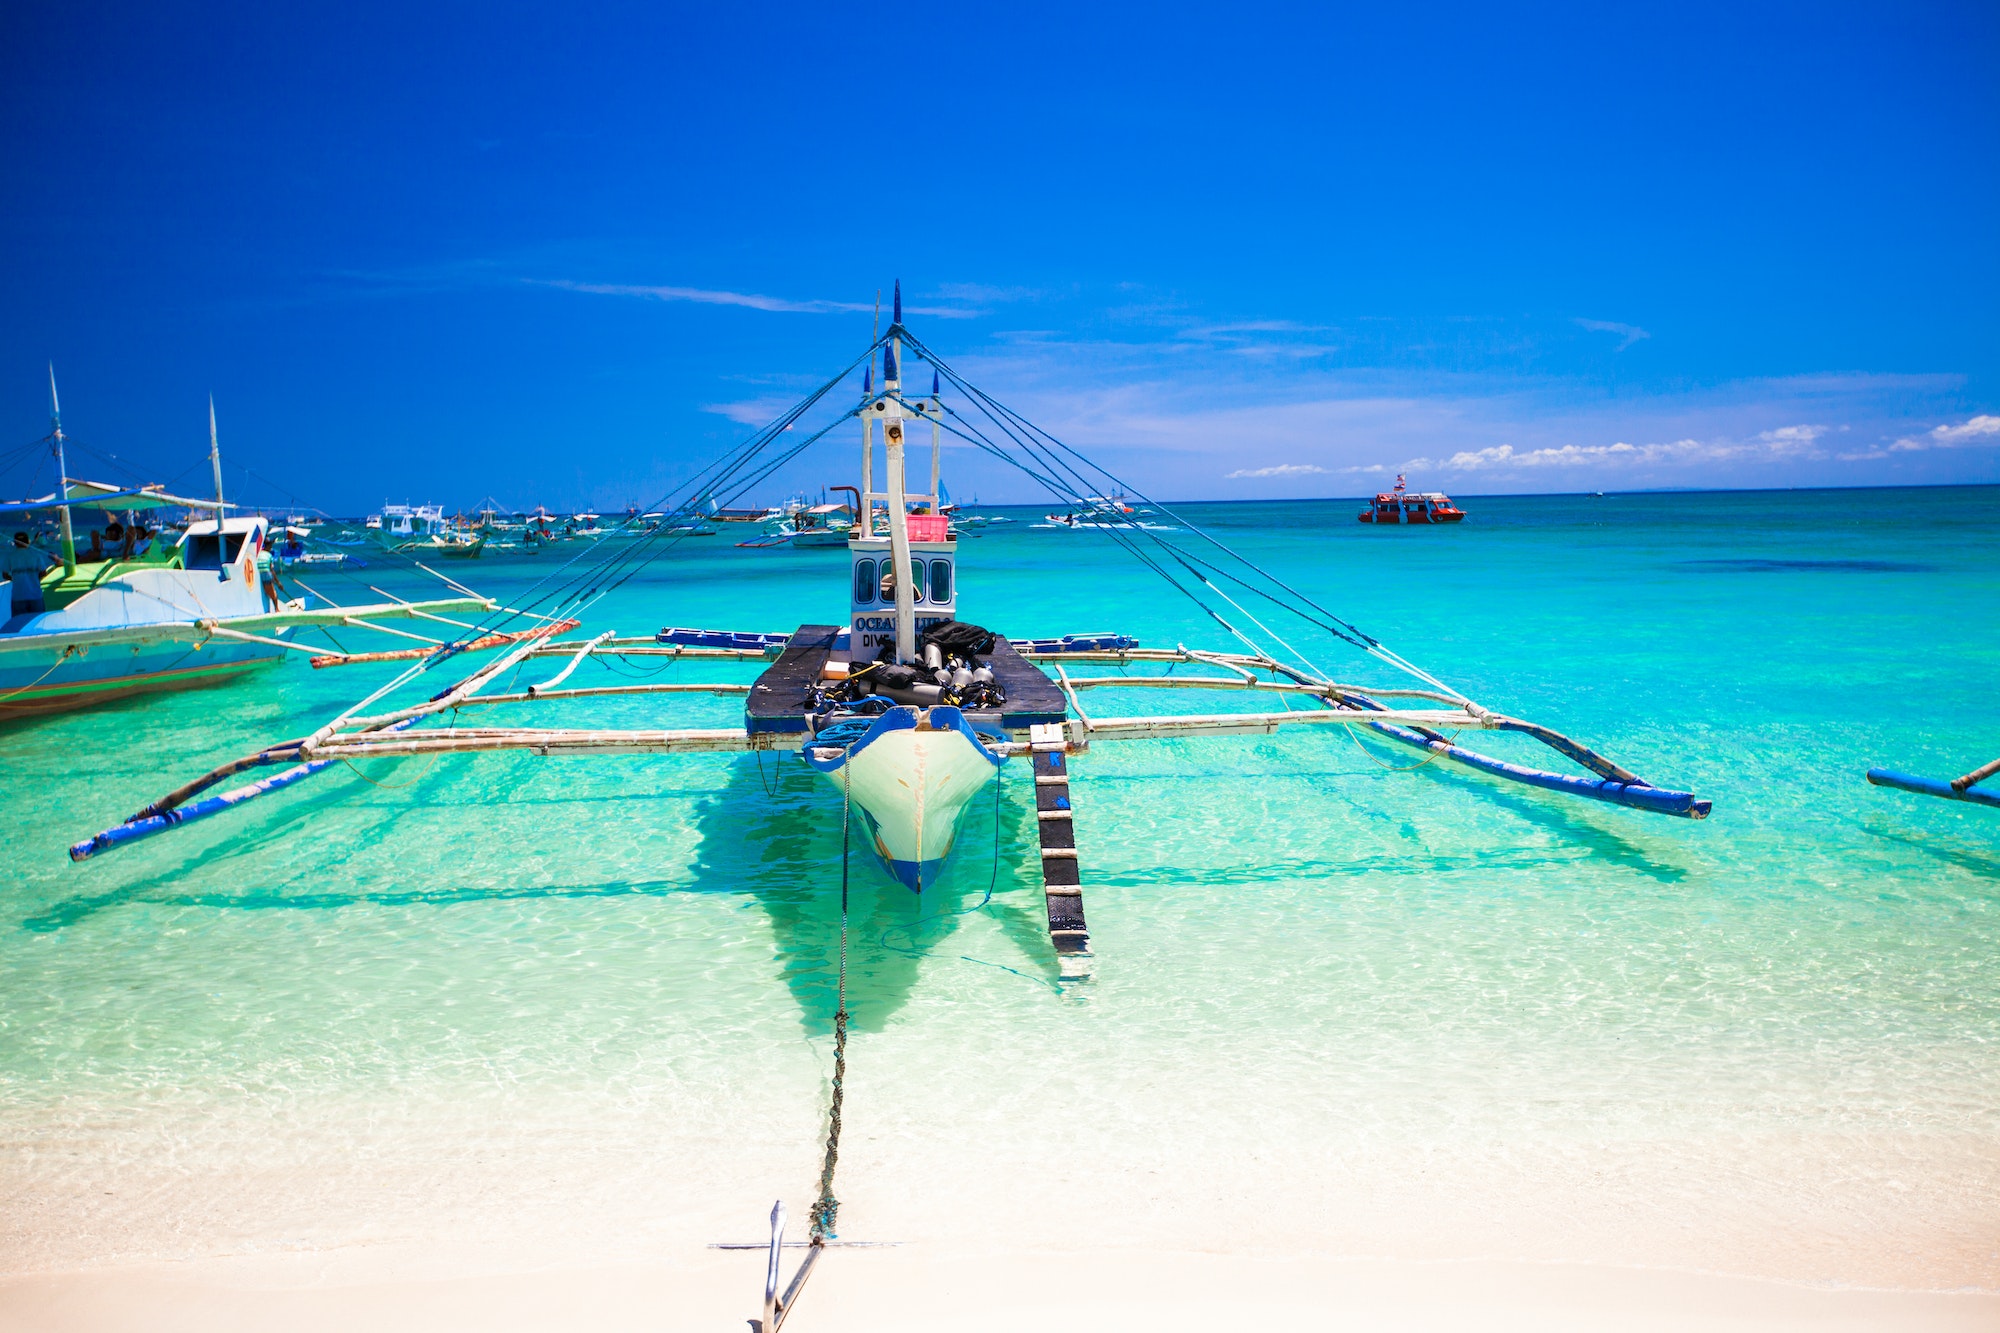 Filipino boat in the turquoise sea, Boracay, Philippines